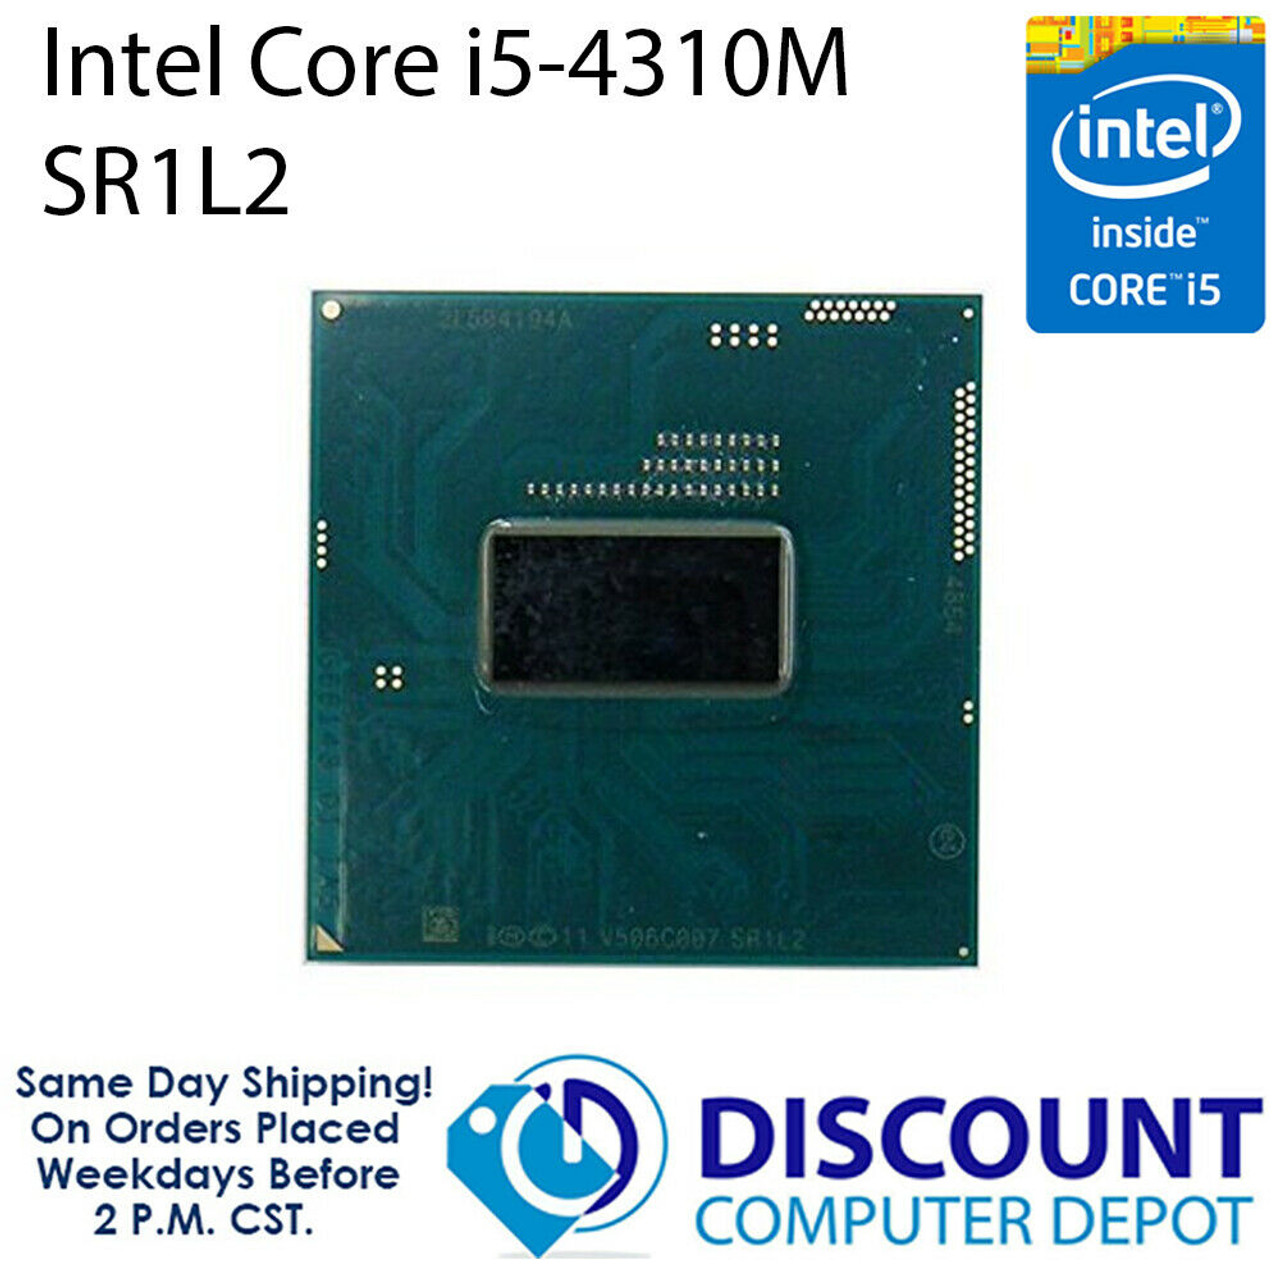 Intel Core i5-4310M 2.7 GHz SR1L2 Laptop CPU Processor PGA 946 G3 ...